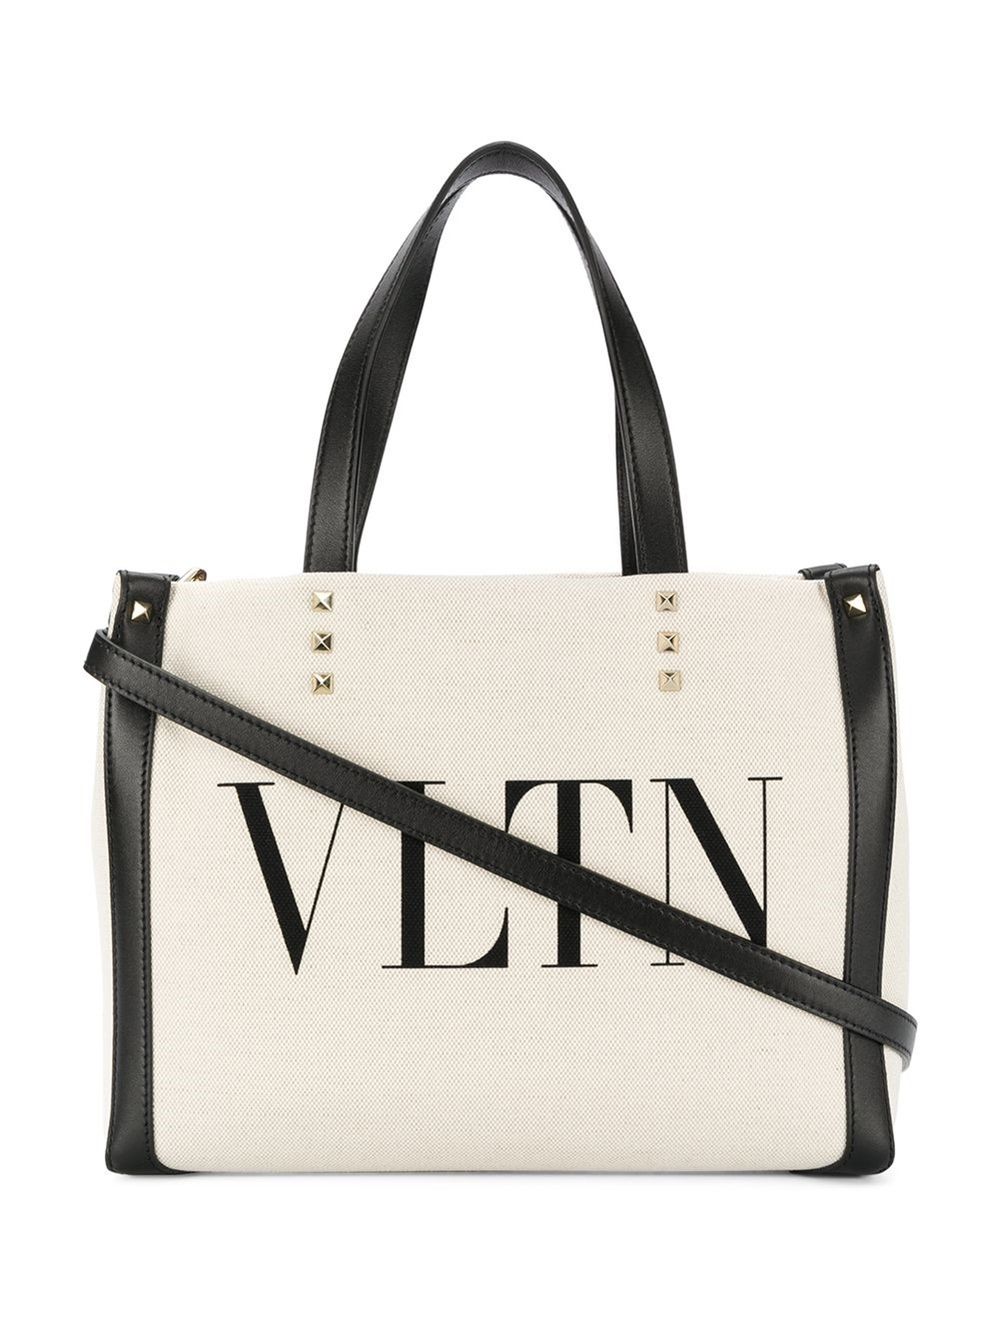 Victoria's Secret Bottom Studs Tote Bags